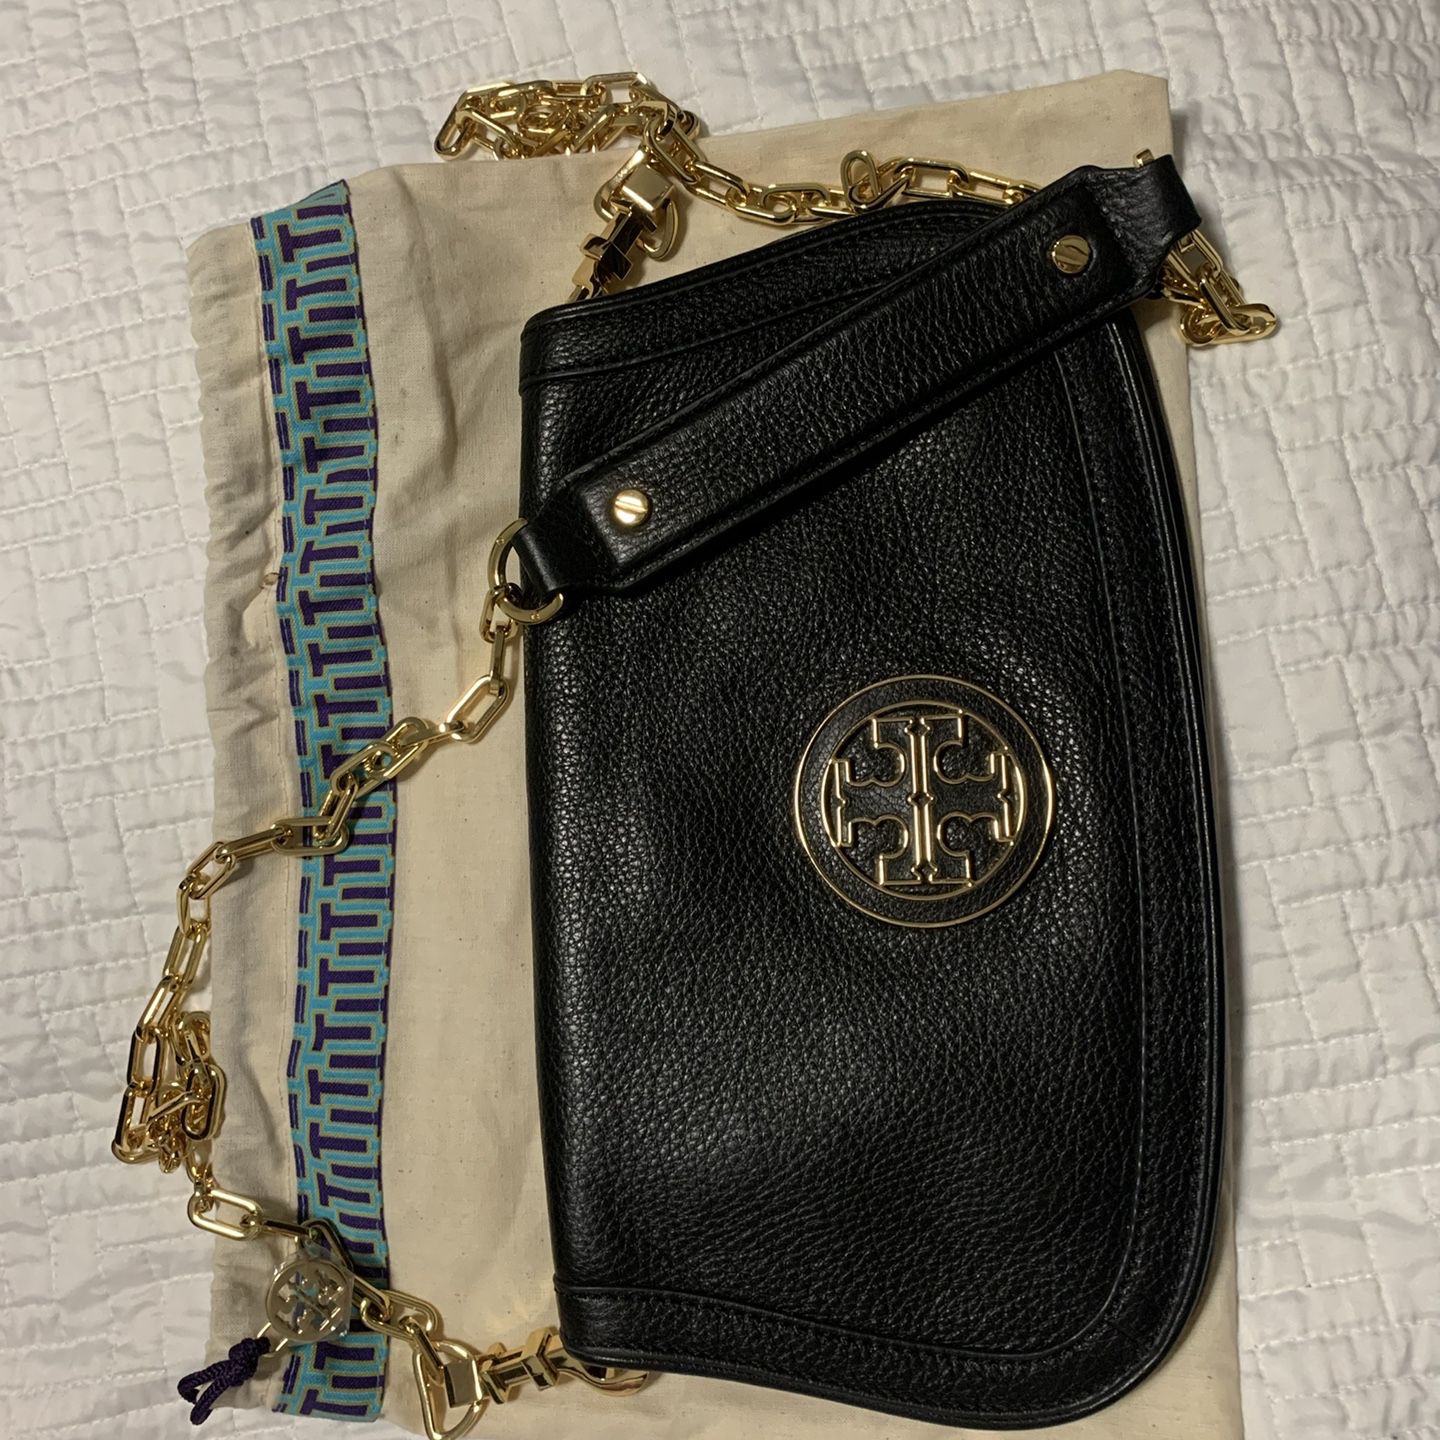 NWT! Tory Burch Thea Mini Web Shoulder Bag Crossbody Pebbled Leather Tassel  NWT for Sale in Carlsbad, CA - OfferUp